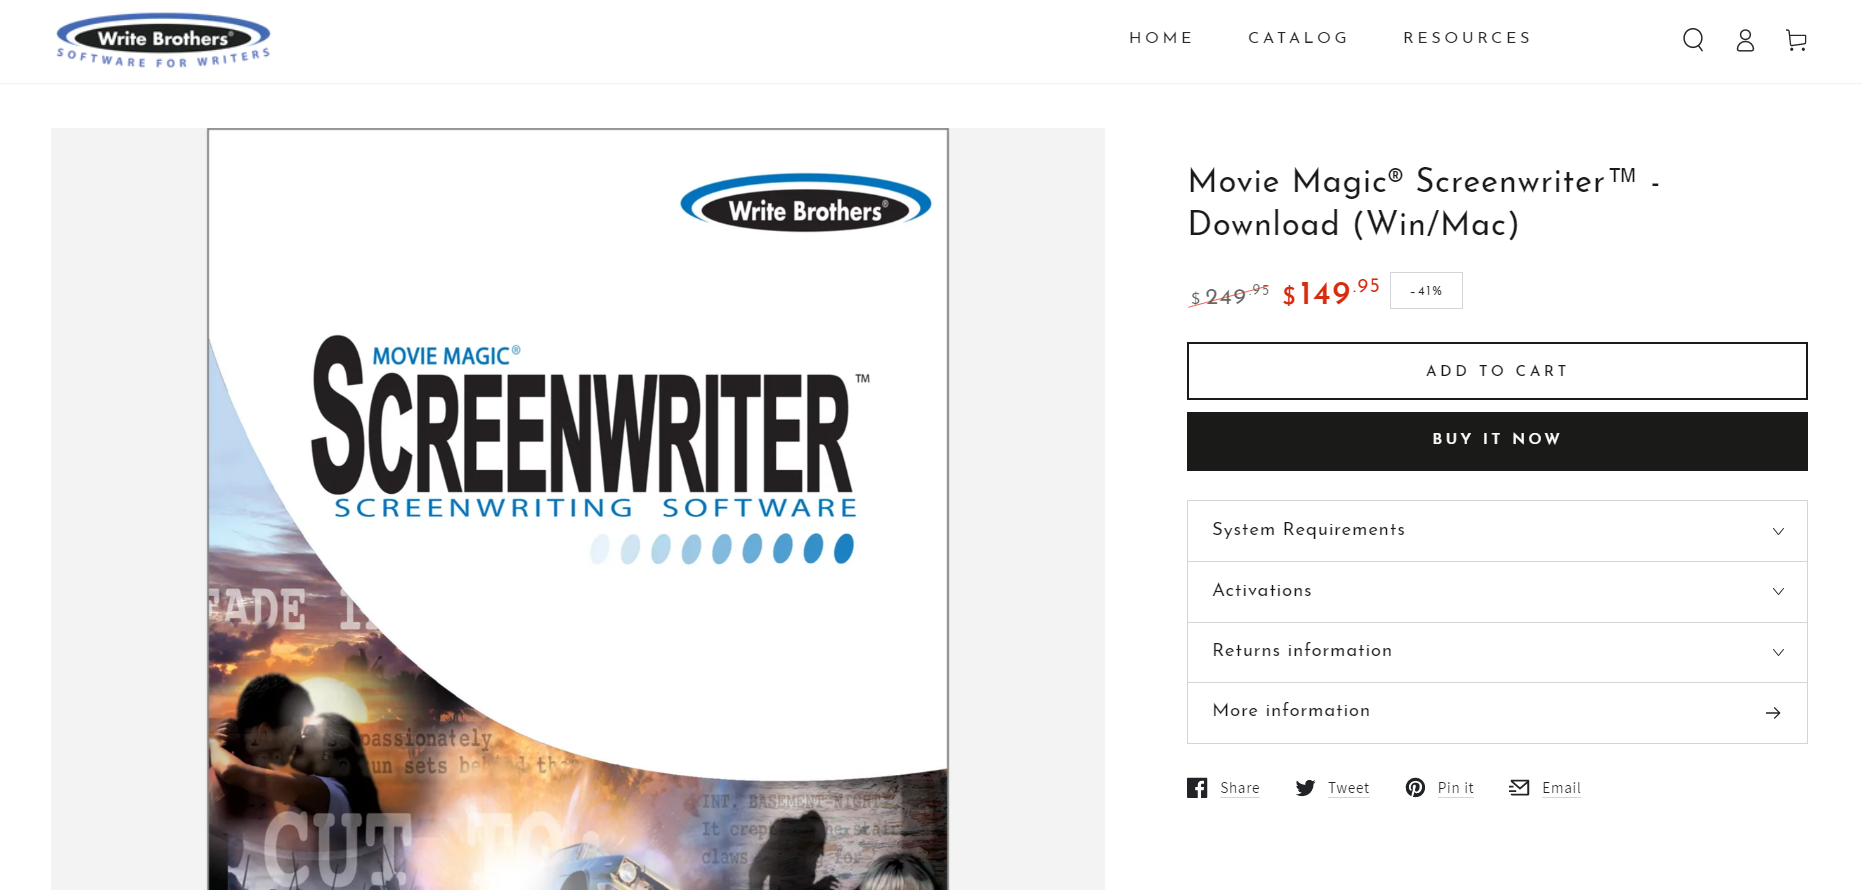 Movie Magic Screenwriter Pricing